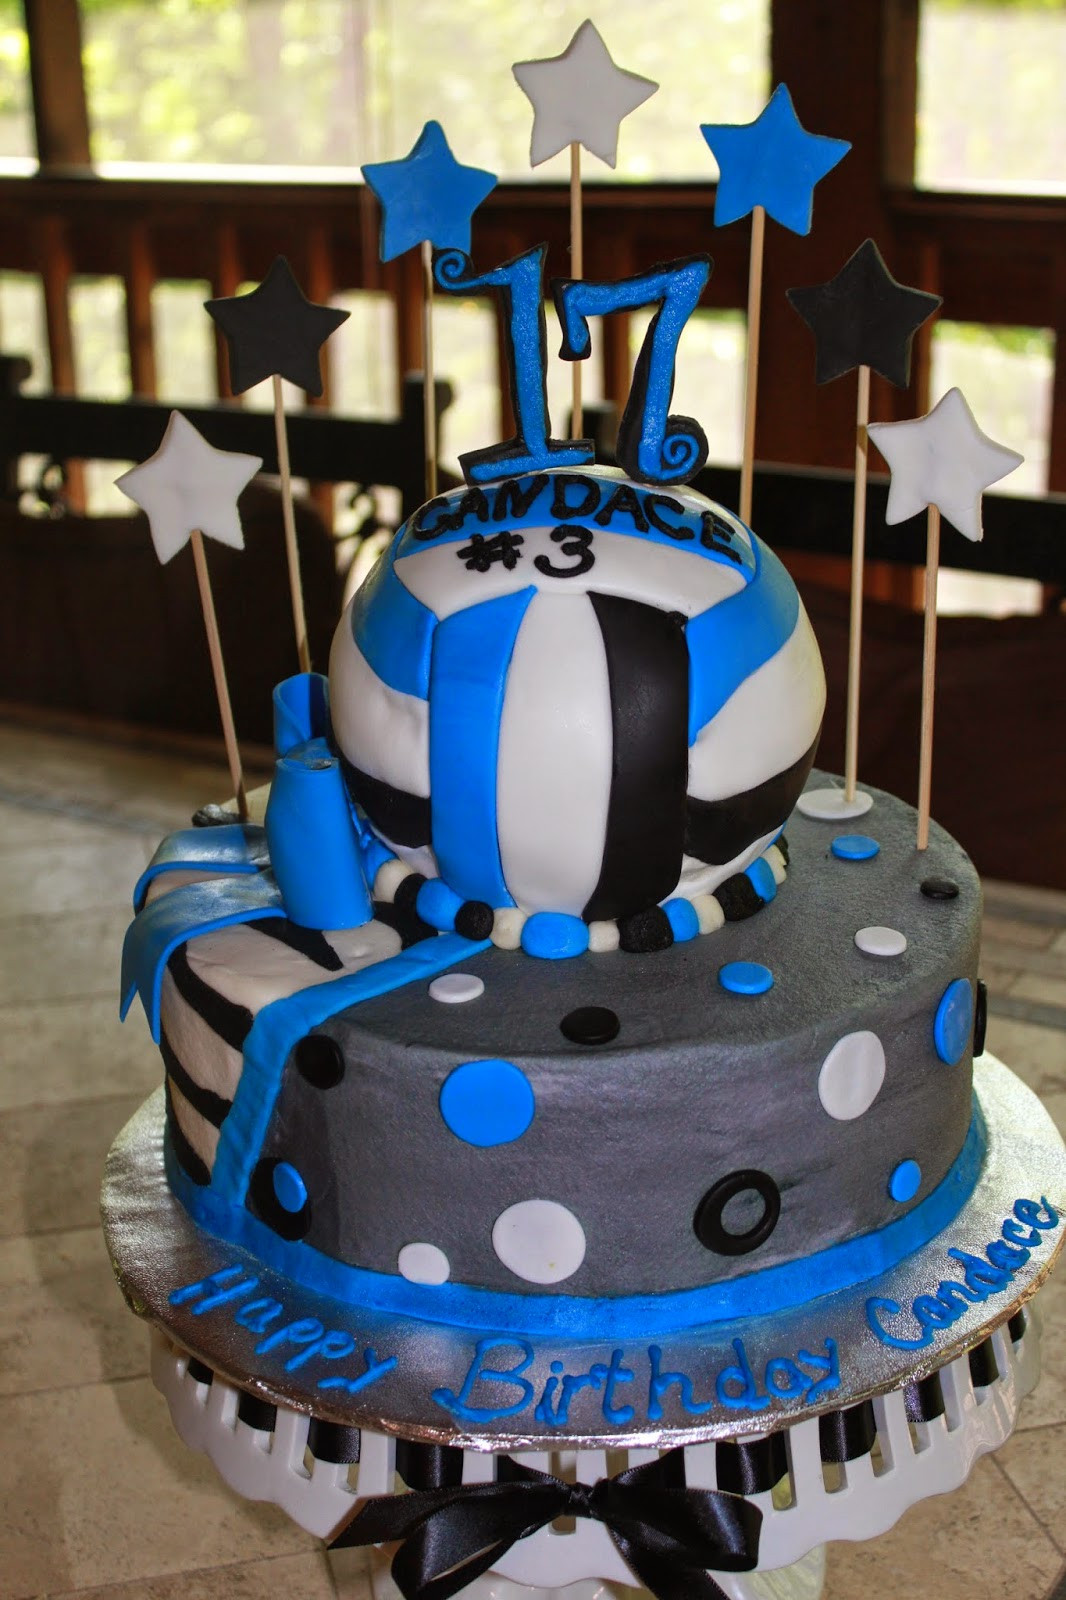 Volleyball Birthday Cake
 Designs by LaMuir Volleyball Birthday Cake anyone